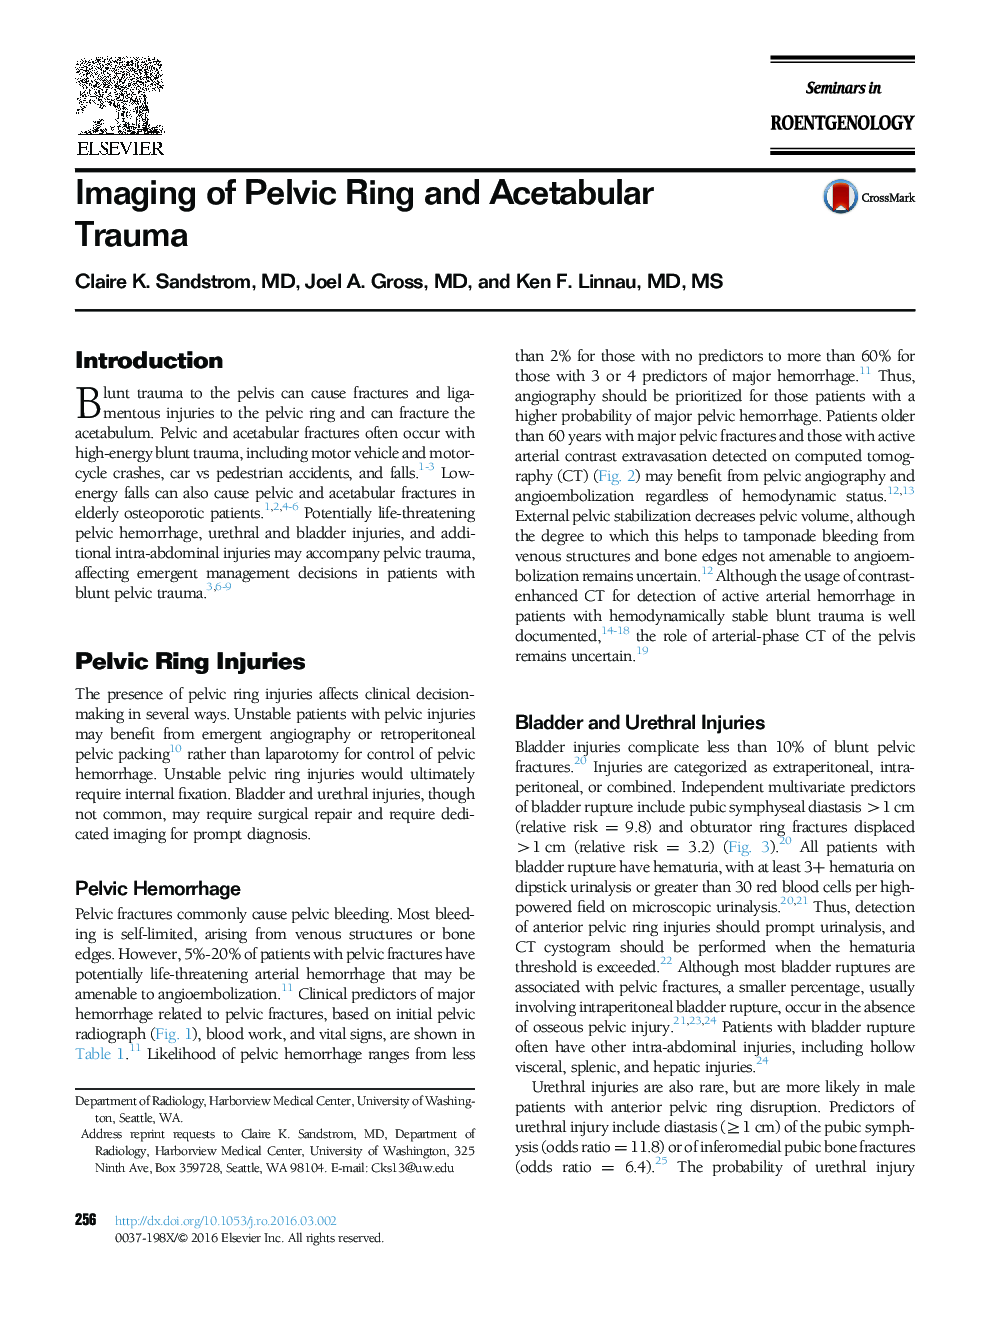 Imaging of Pelvic Ring and Acetabular Trauma